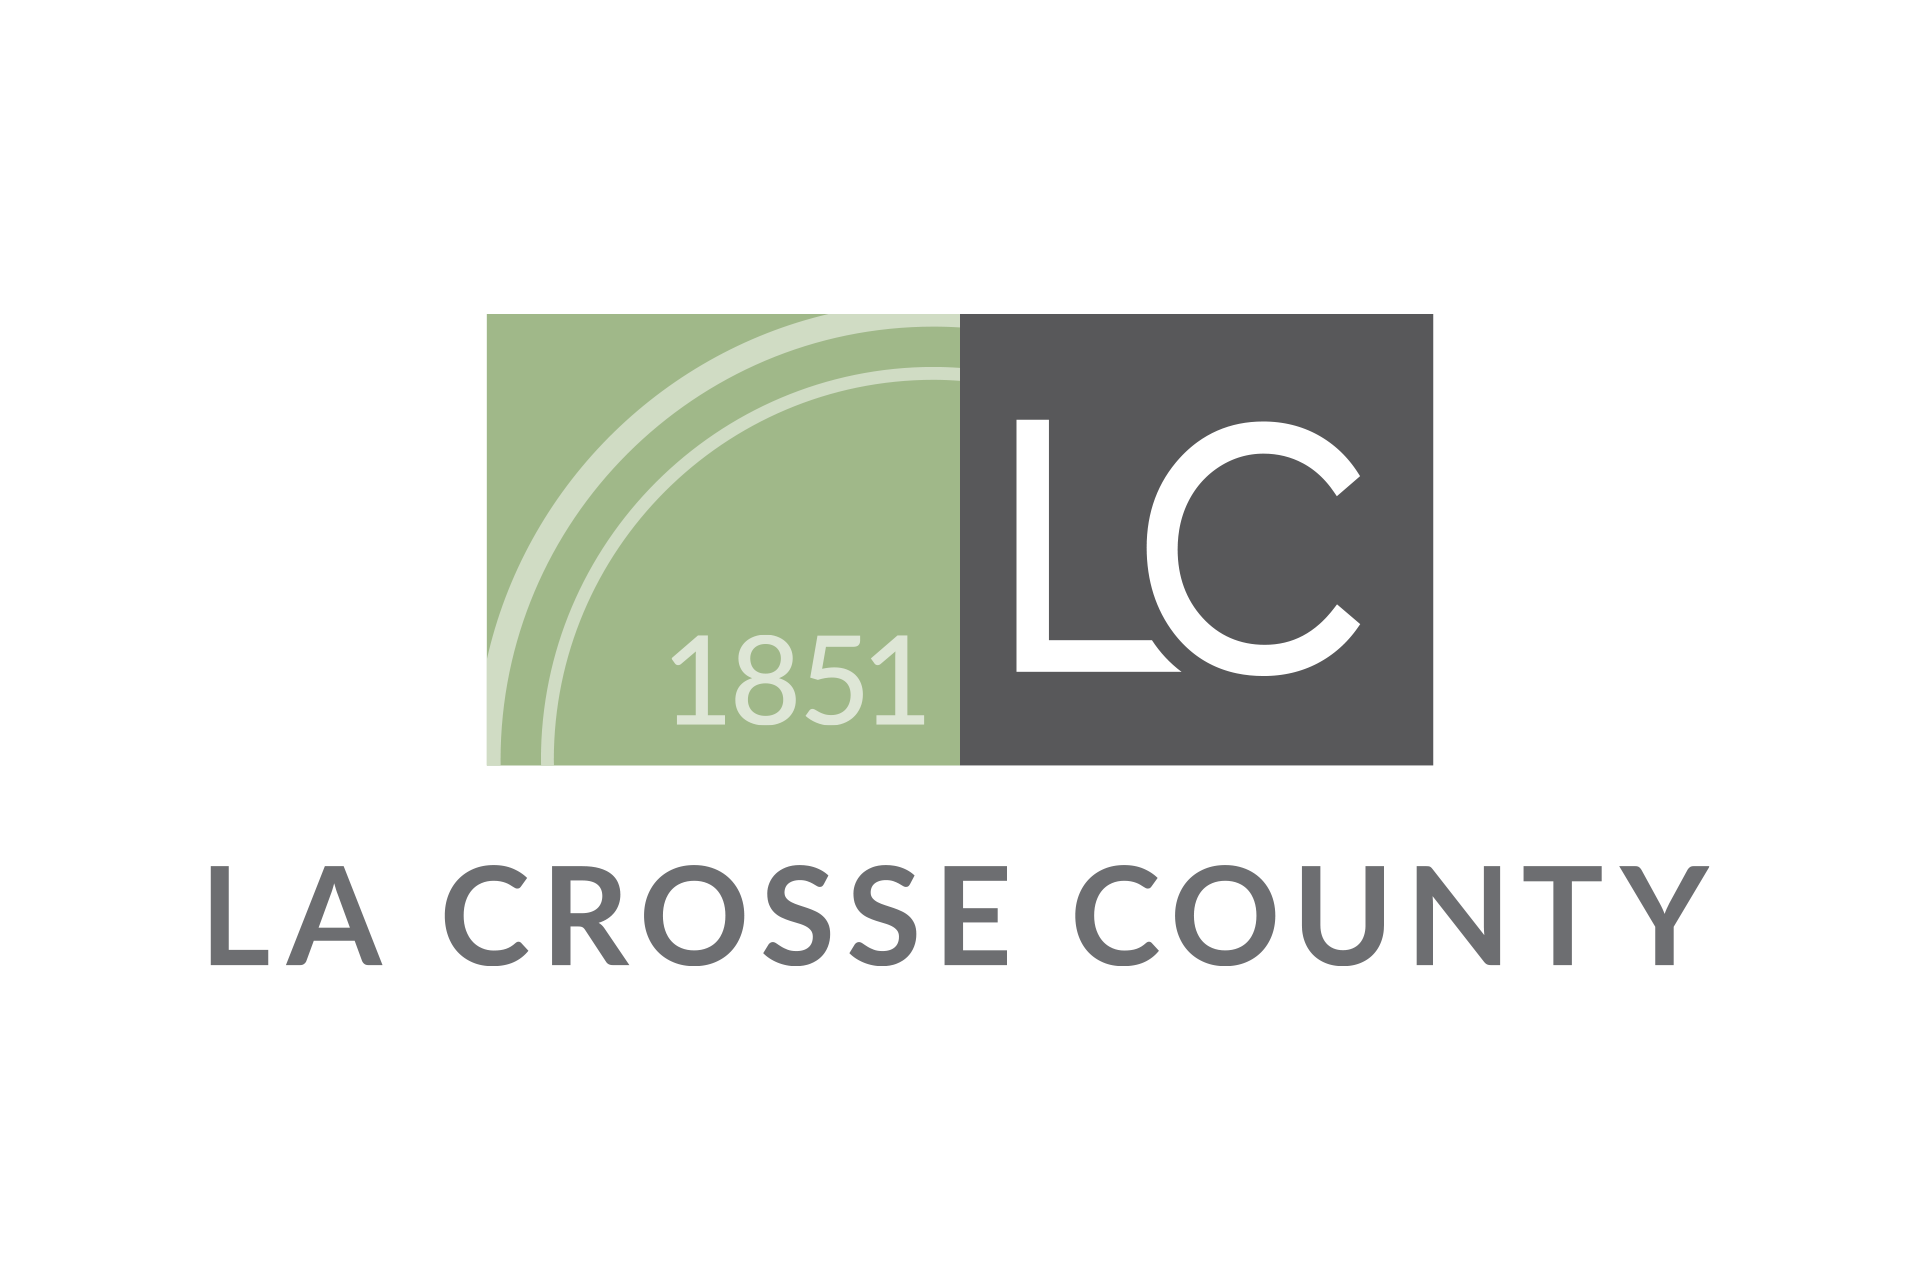 La Crosse County logo